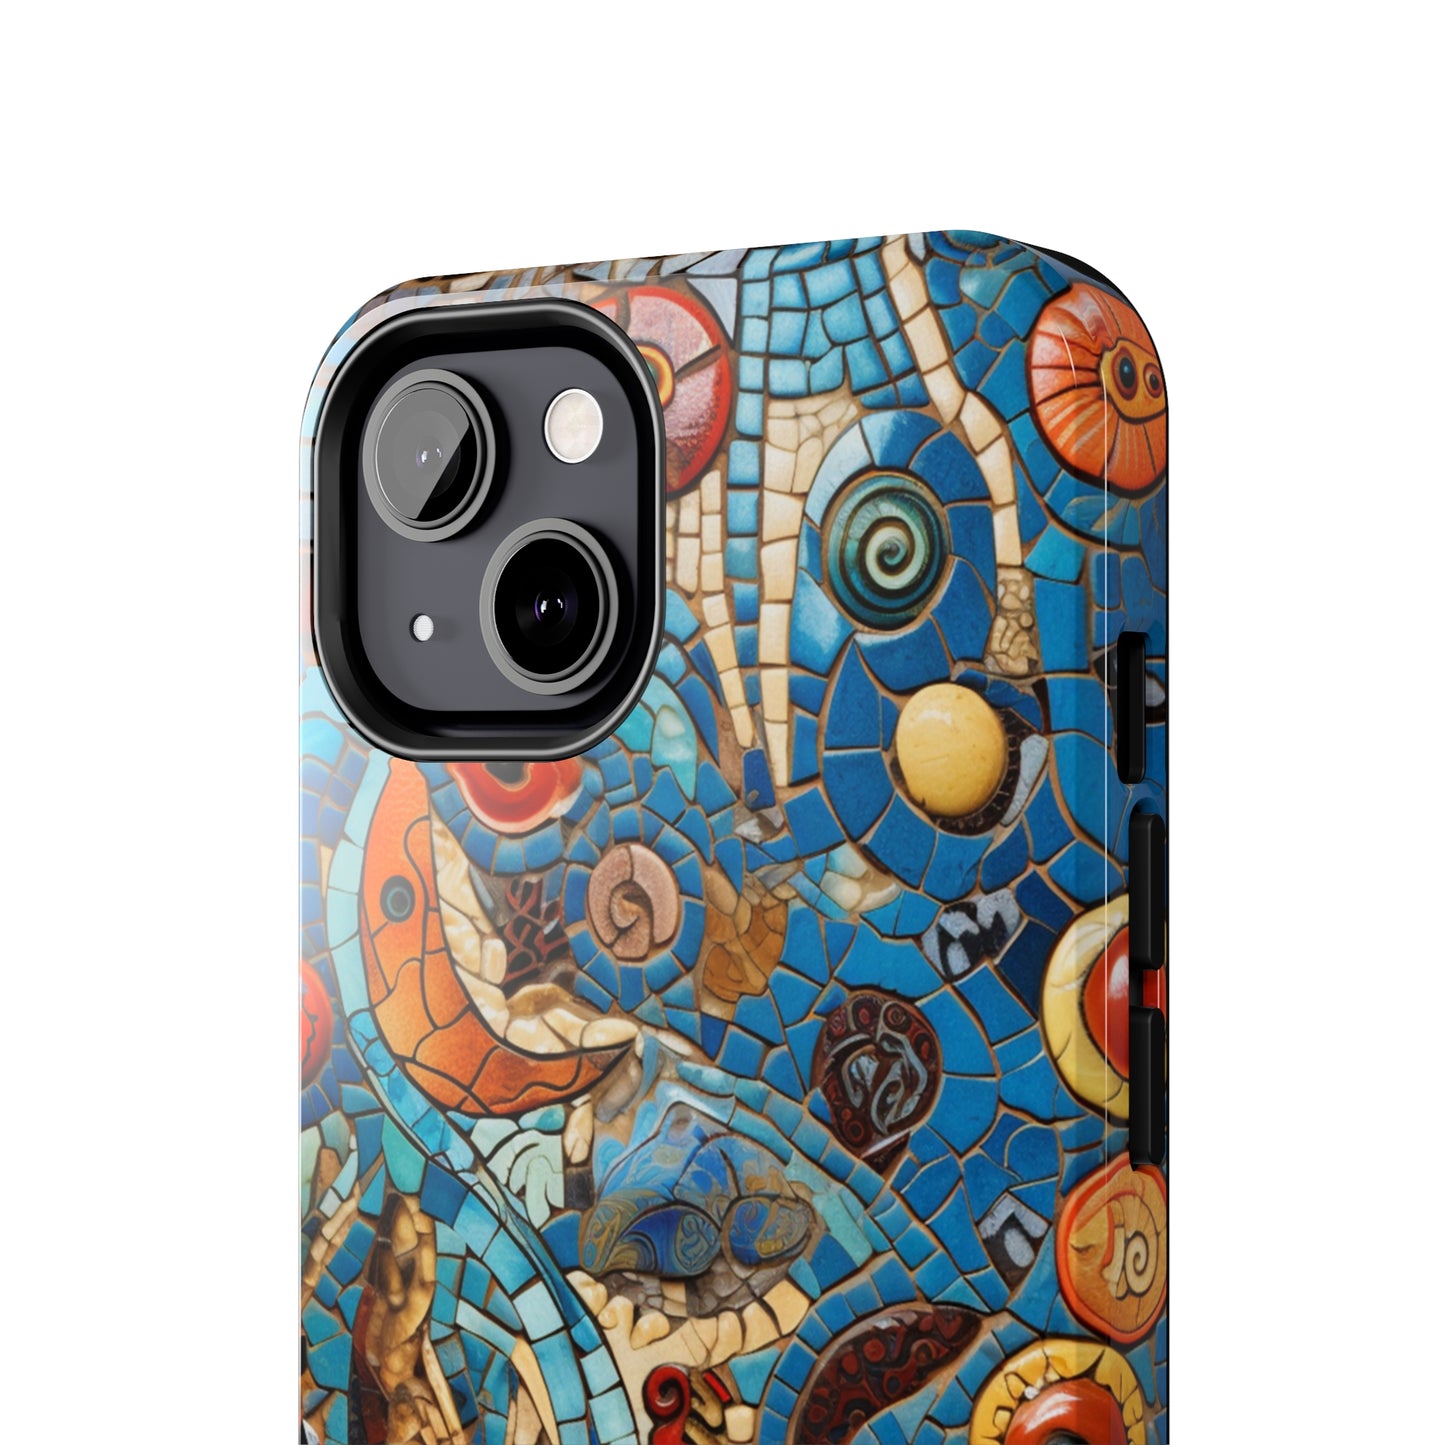 Cultural Tile iPhone Case | Embrace the Beauty of Diverse Cultures